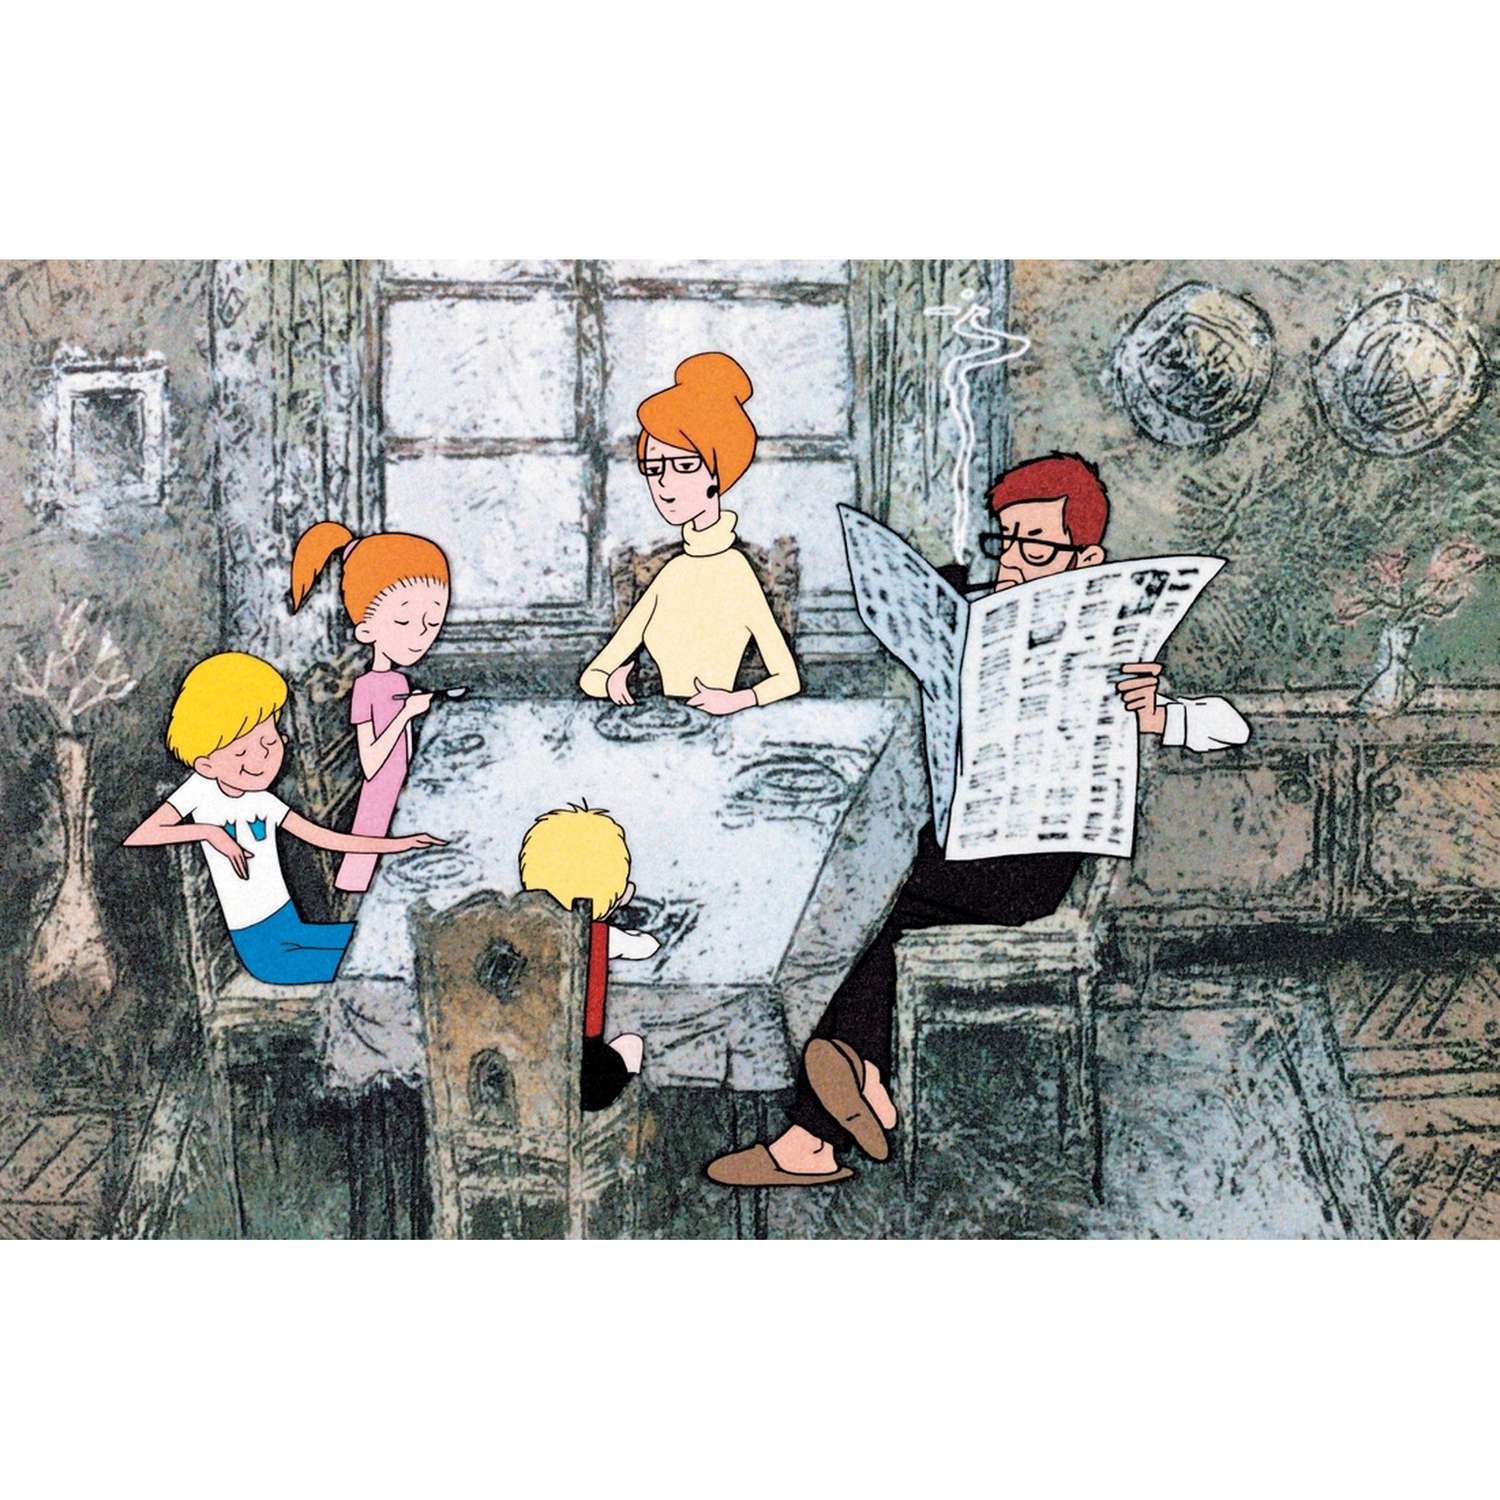 Книга Малыш и Карлсон который живёт на крыше Линдгрен иллюстрации Савченко - фото 8